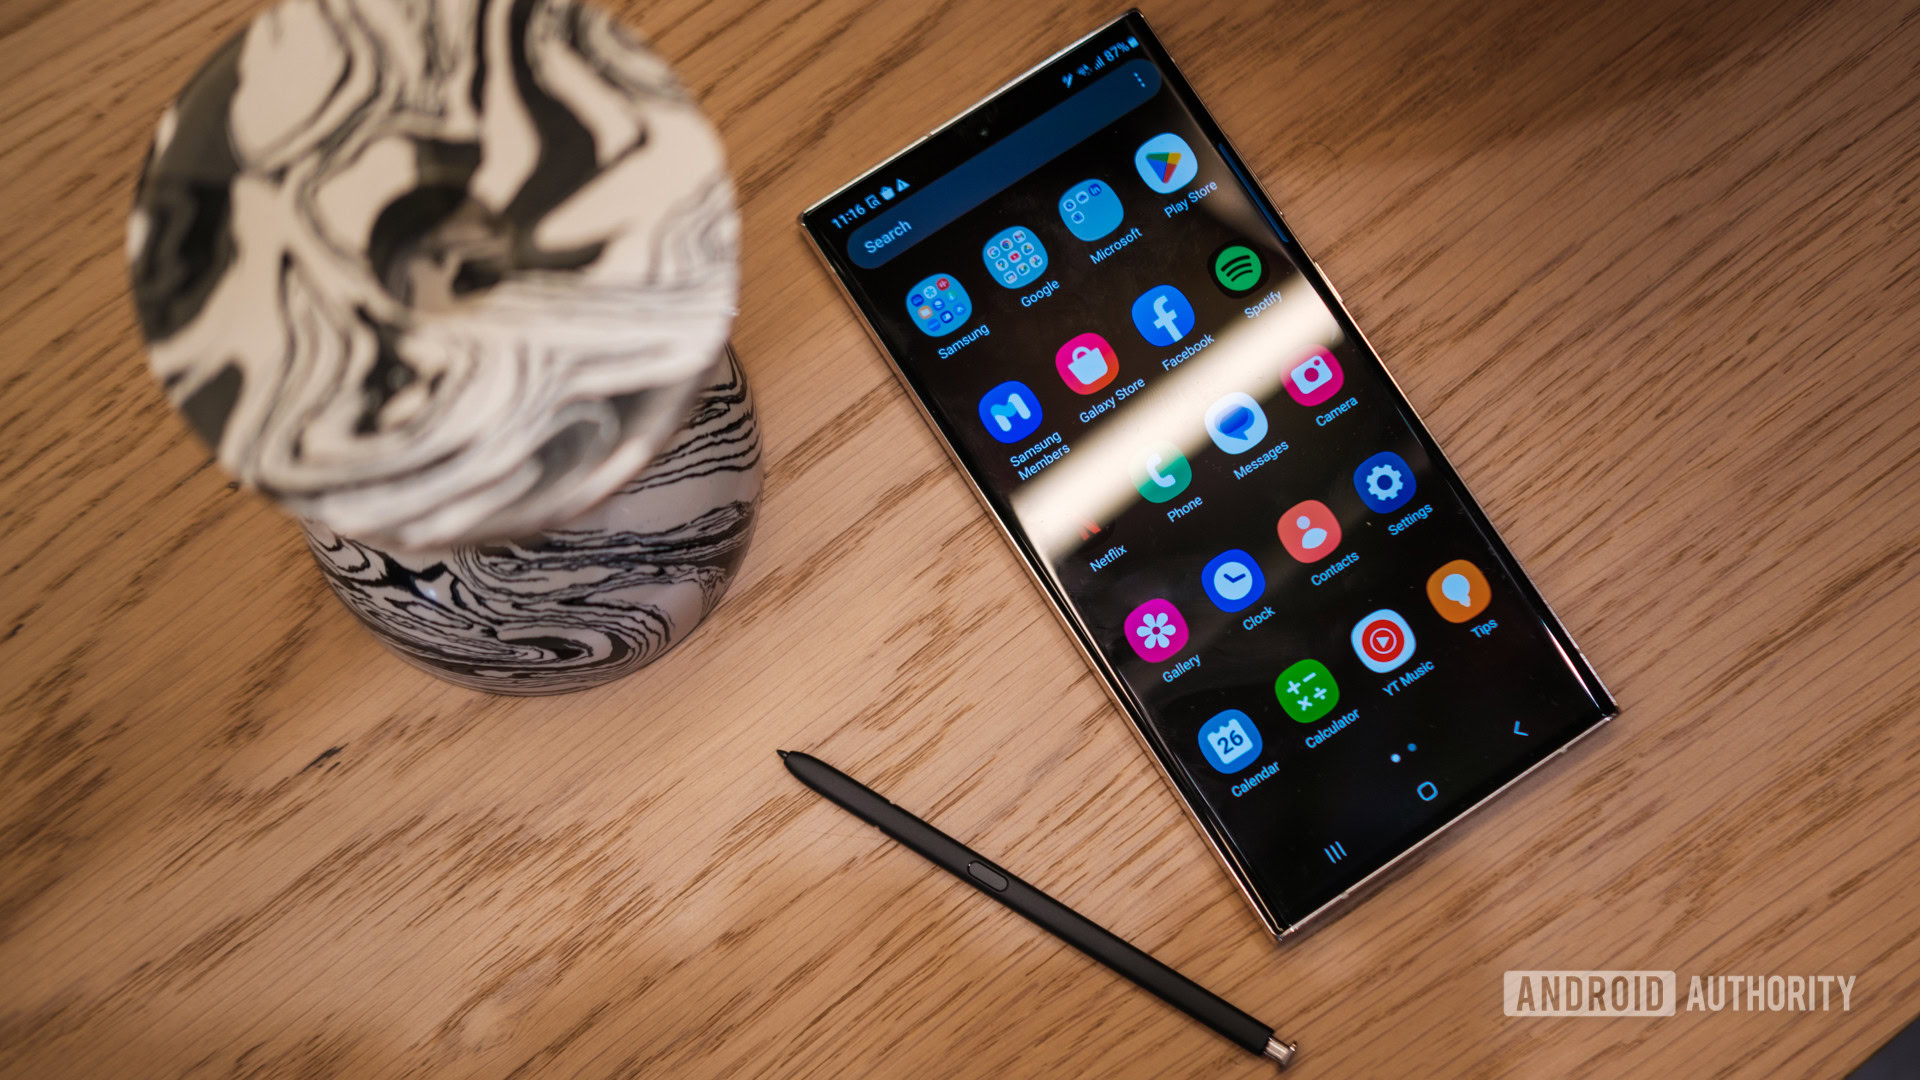 Samsung Galaxy S23 Review: The Galaxy To Get! — Sypnotix